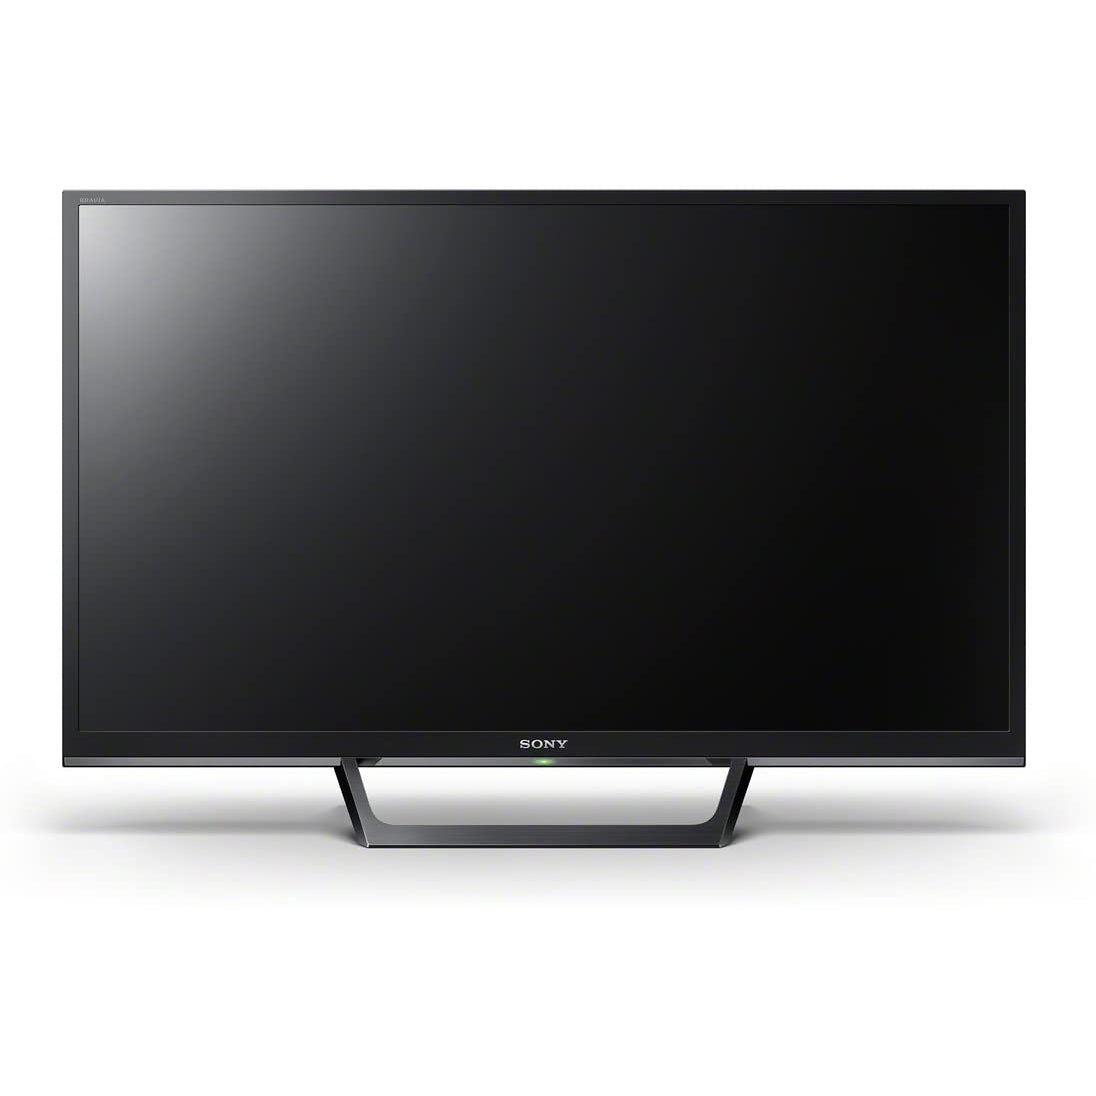 Sony Bravia KDL32WE613 (32-Inch) HD Ready HDR Smart TV